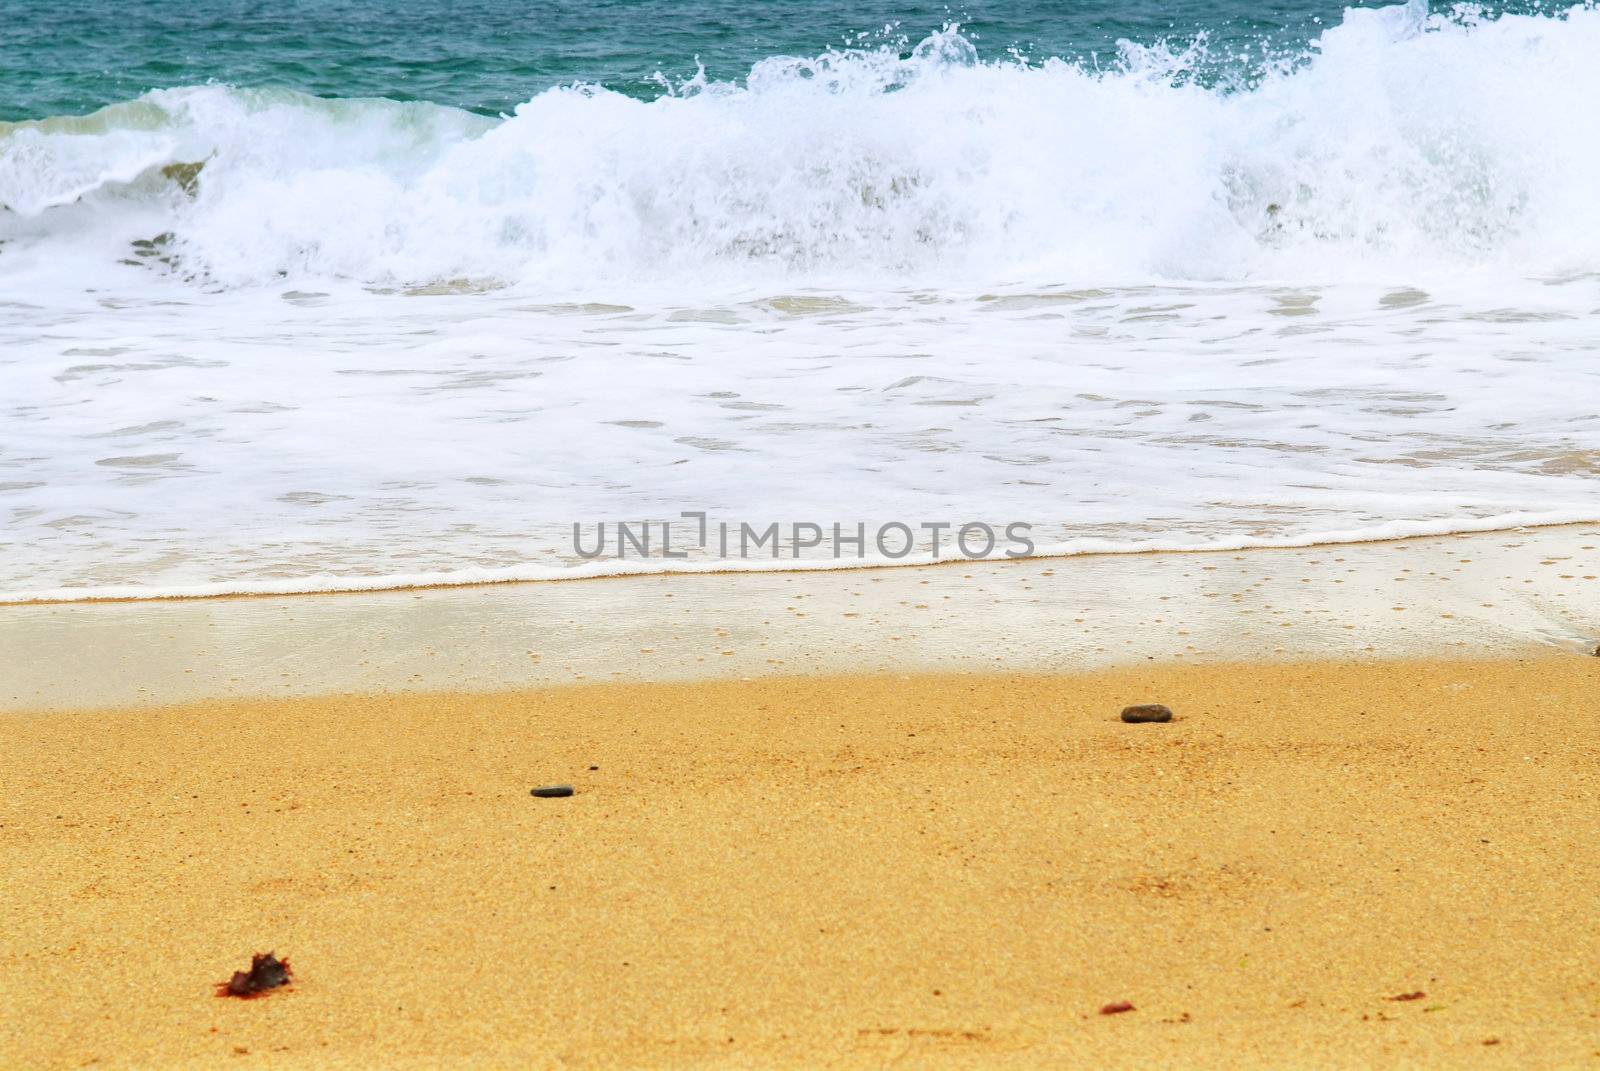 Ocean wave advancing on a sandy beach